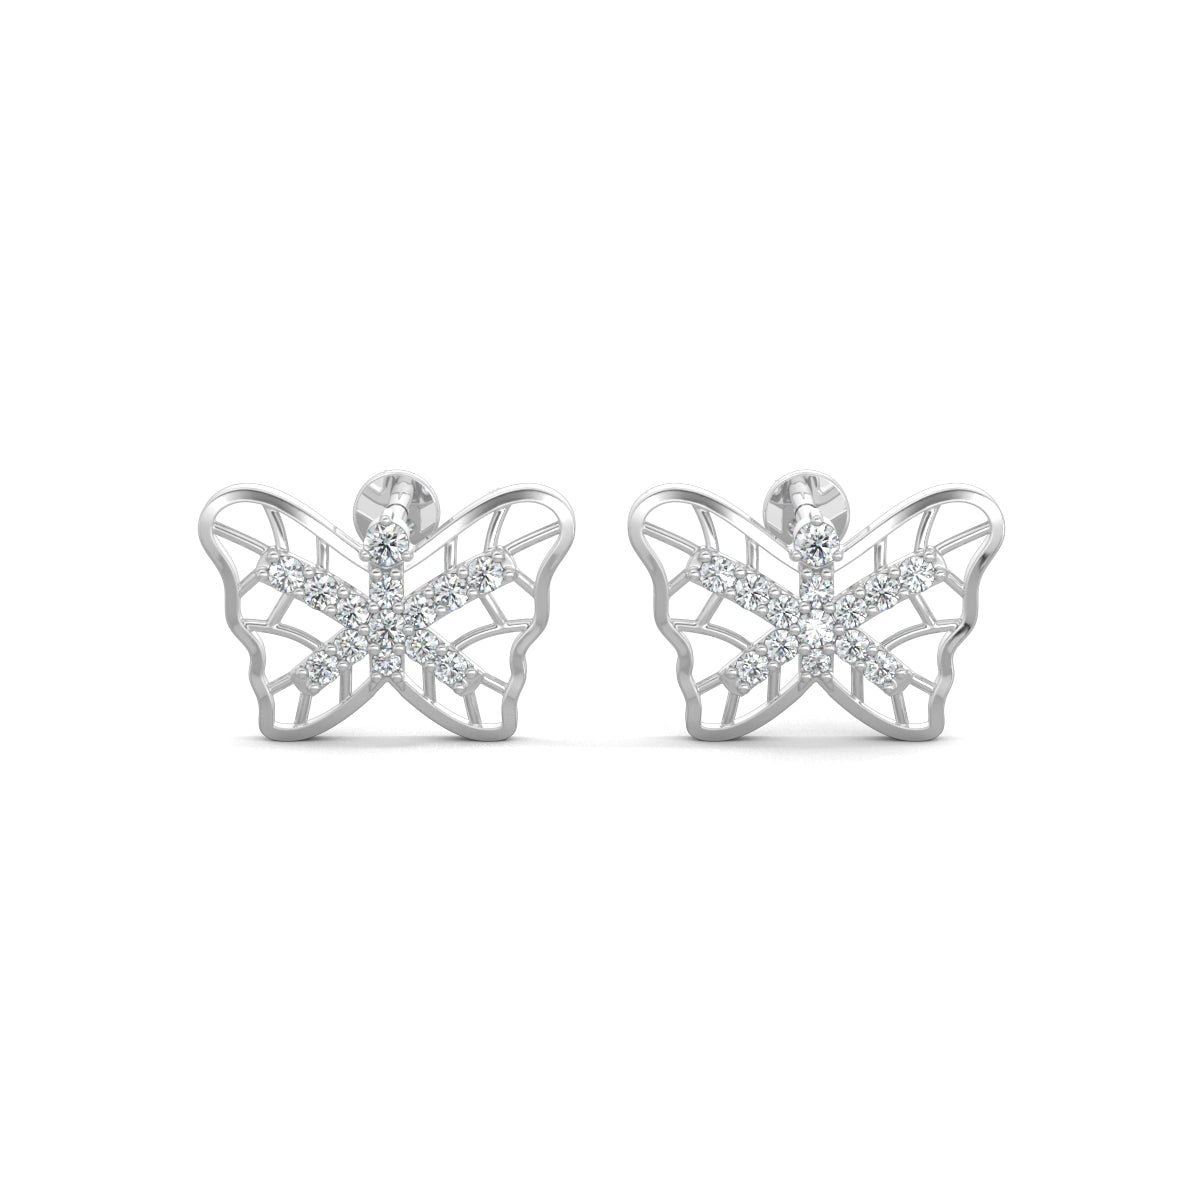 White Gold, Diamond Earrings, Natural diamonds stud earrings, Lab-grown diamond stud earrings, Wing shape earrings, Diamond embellished wing earrings, Elegant diamond studs